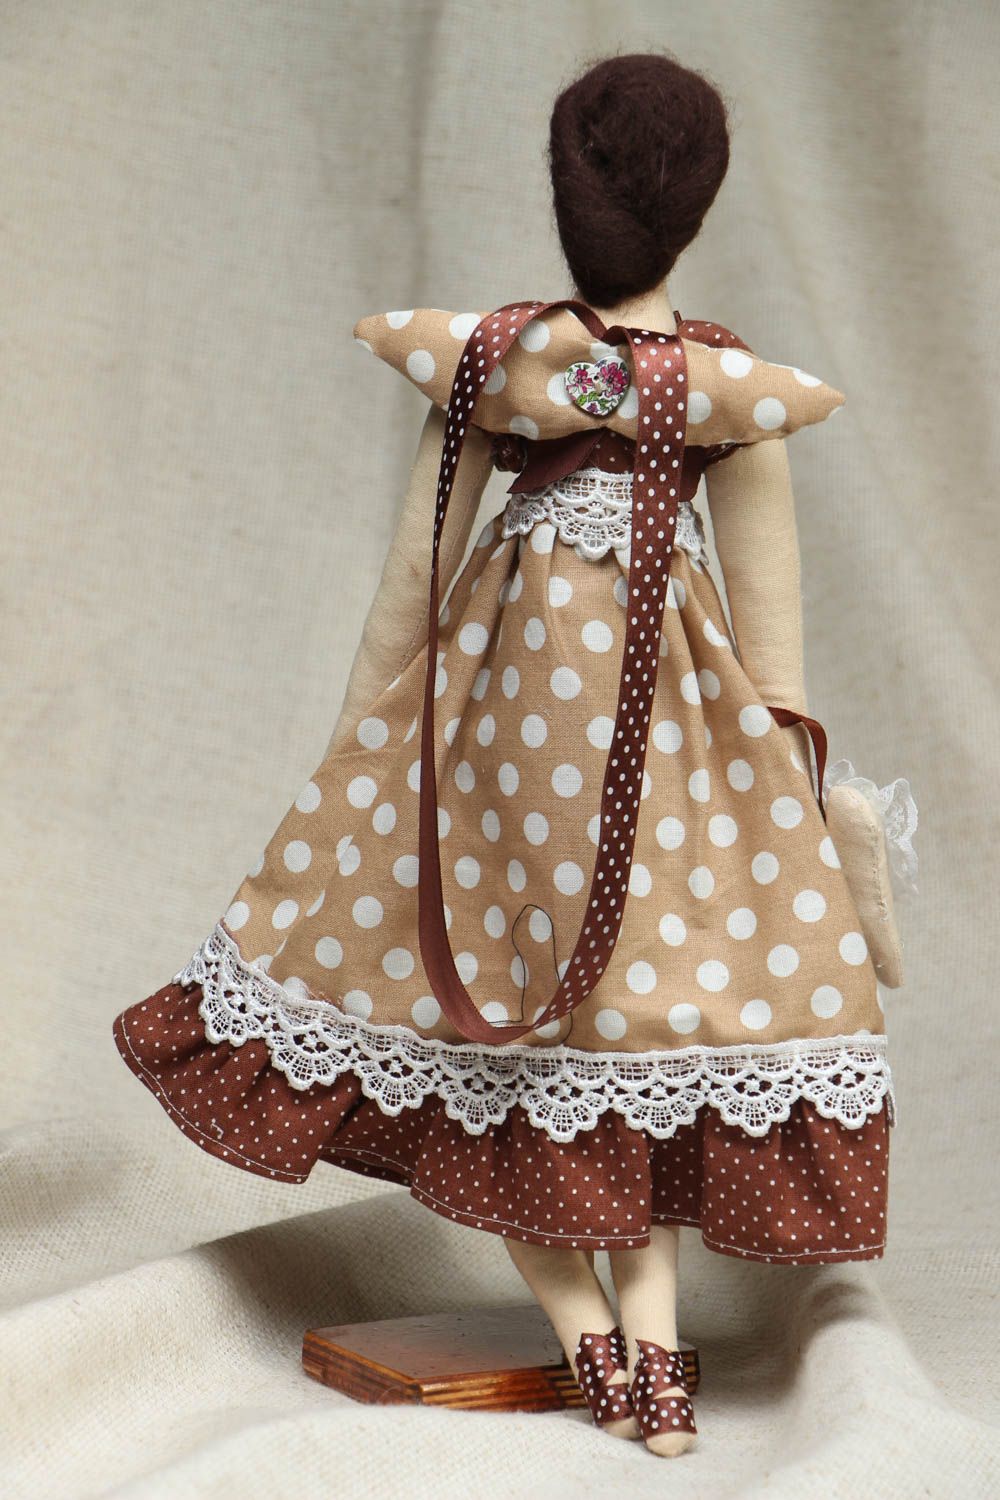 Handmade doll in dress photo 3